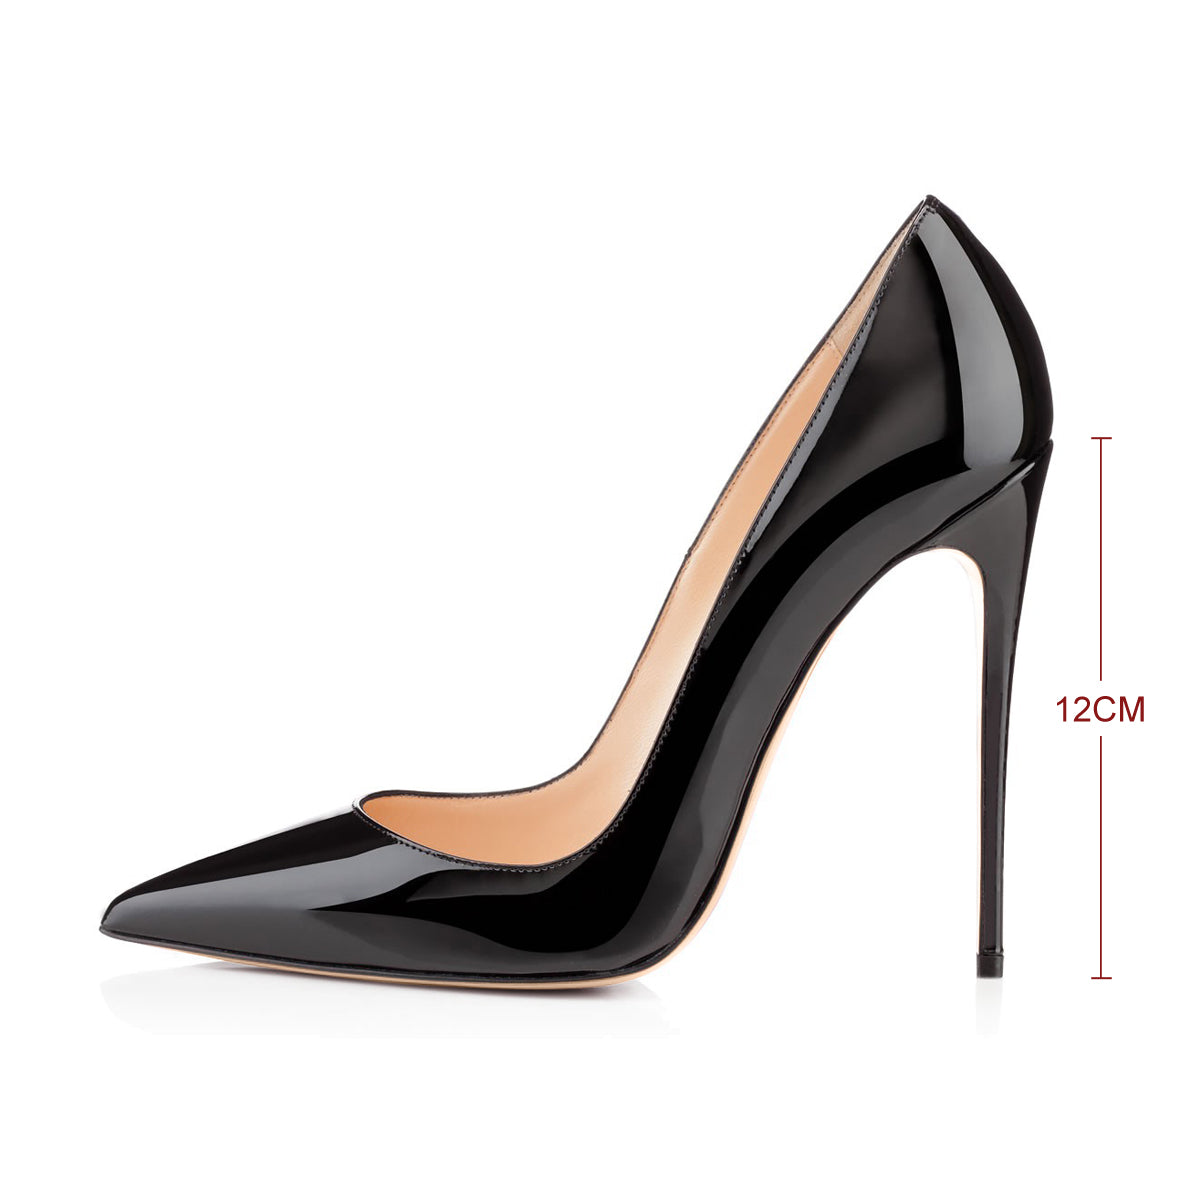 8cm 10cm 12cm Pointed Toe Slip On High Heel Pumps – Onlymaker